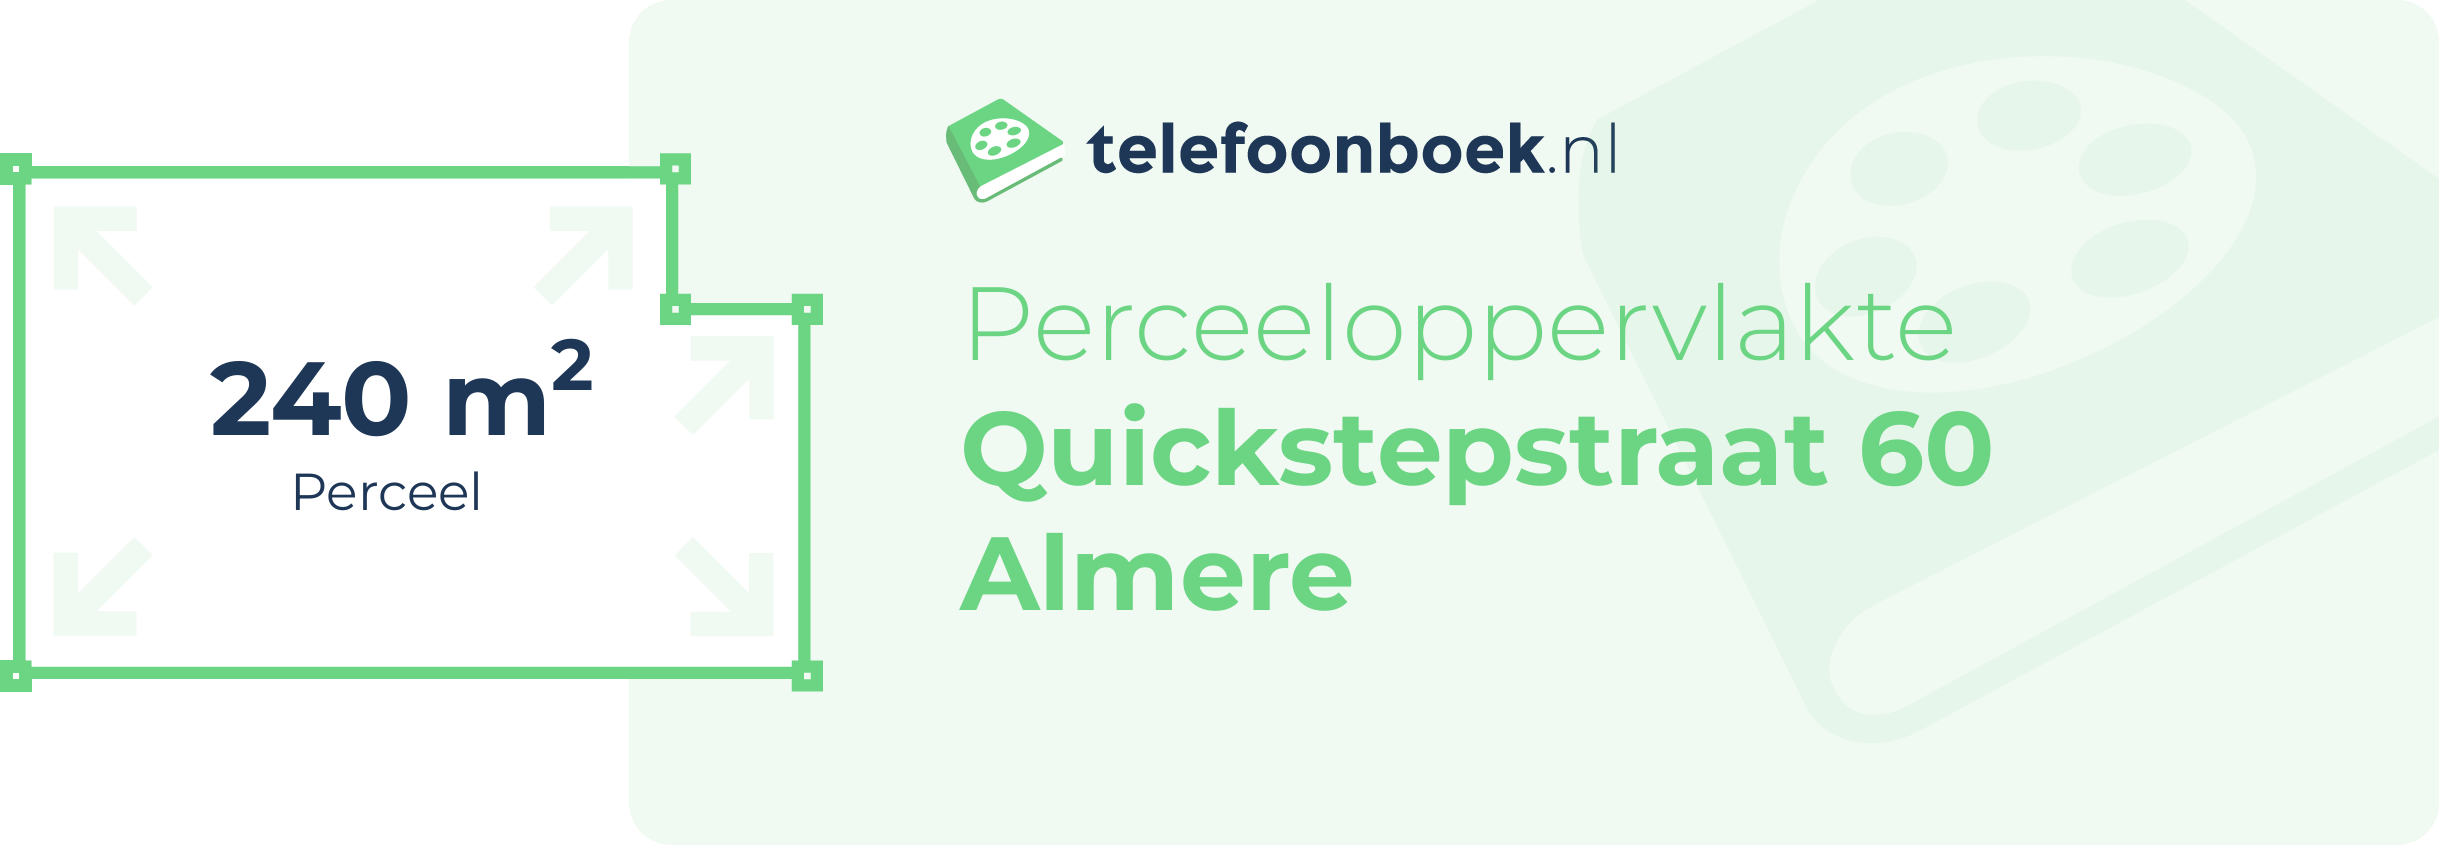 Perceeloppervlakte Quickstepstraat 60 Almere